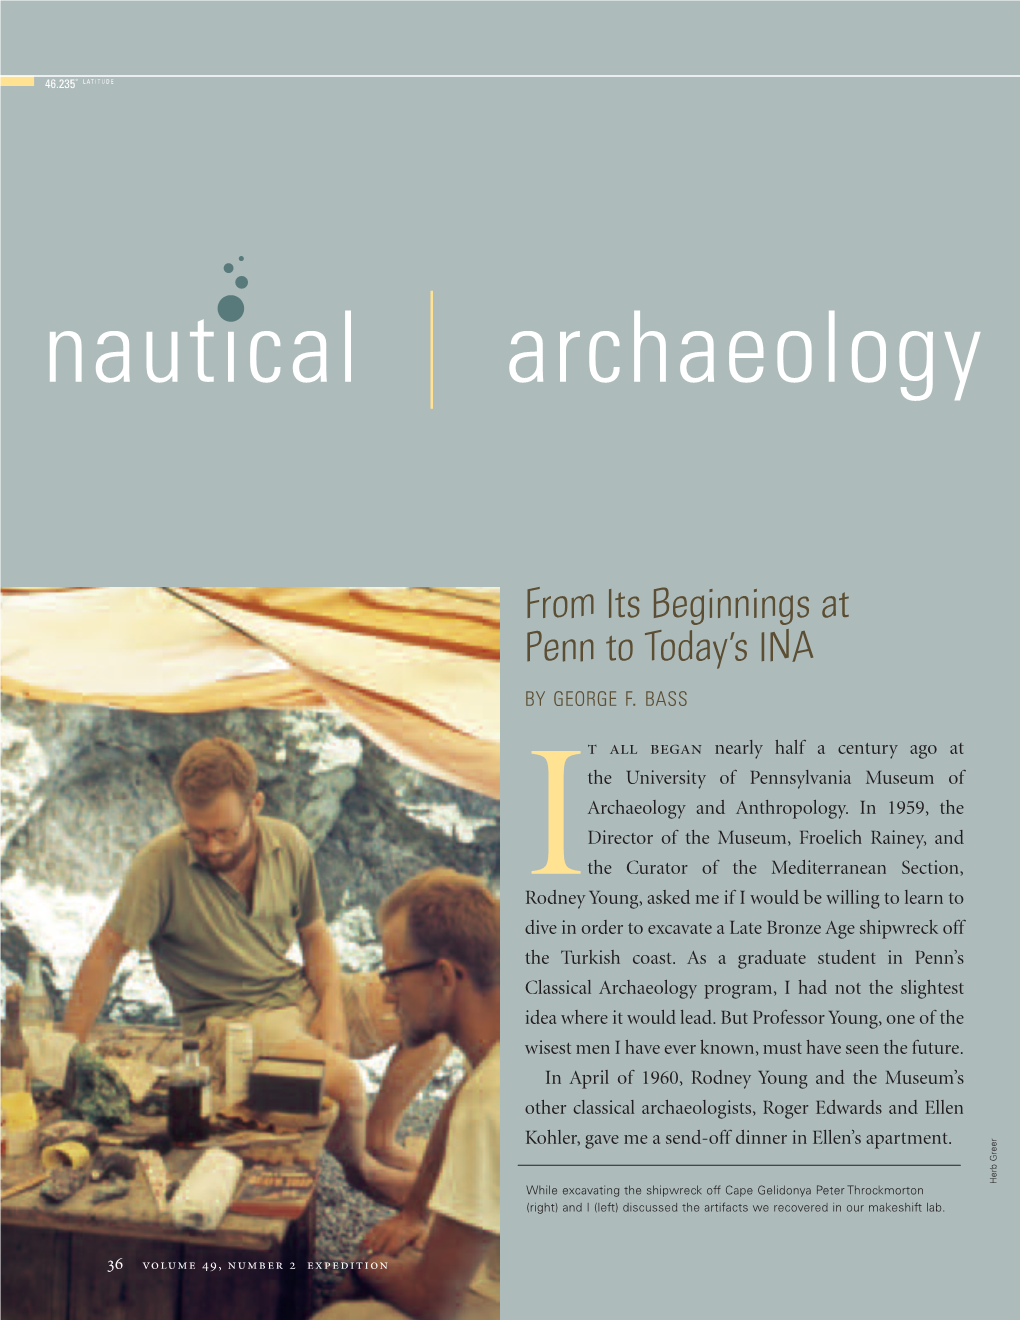 Nautical Archaeology